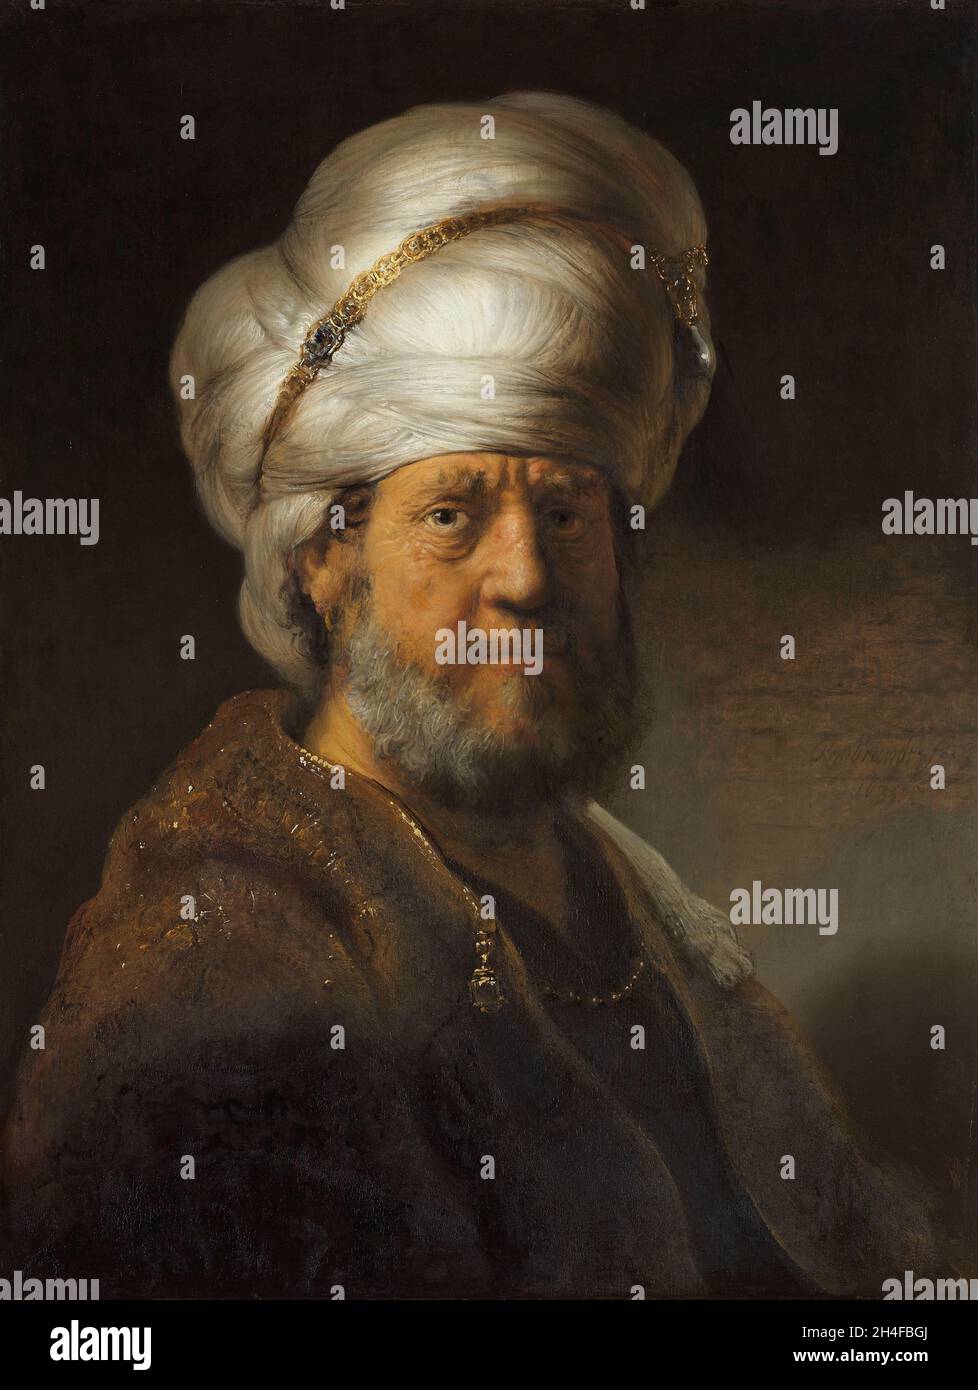 Homme en vêtements orientaux, Rembrandt van Rijn, Rijksmuseum, Amsterdam Banque D'Images